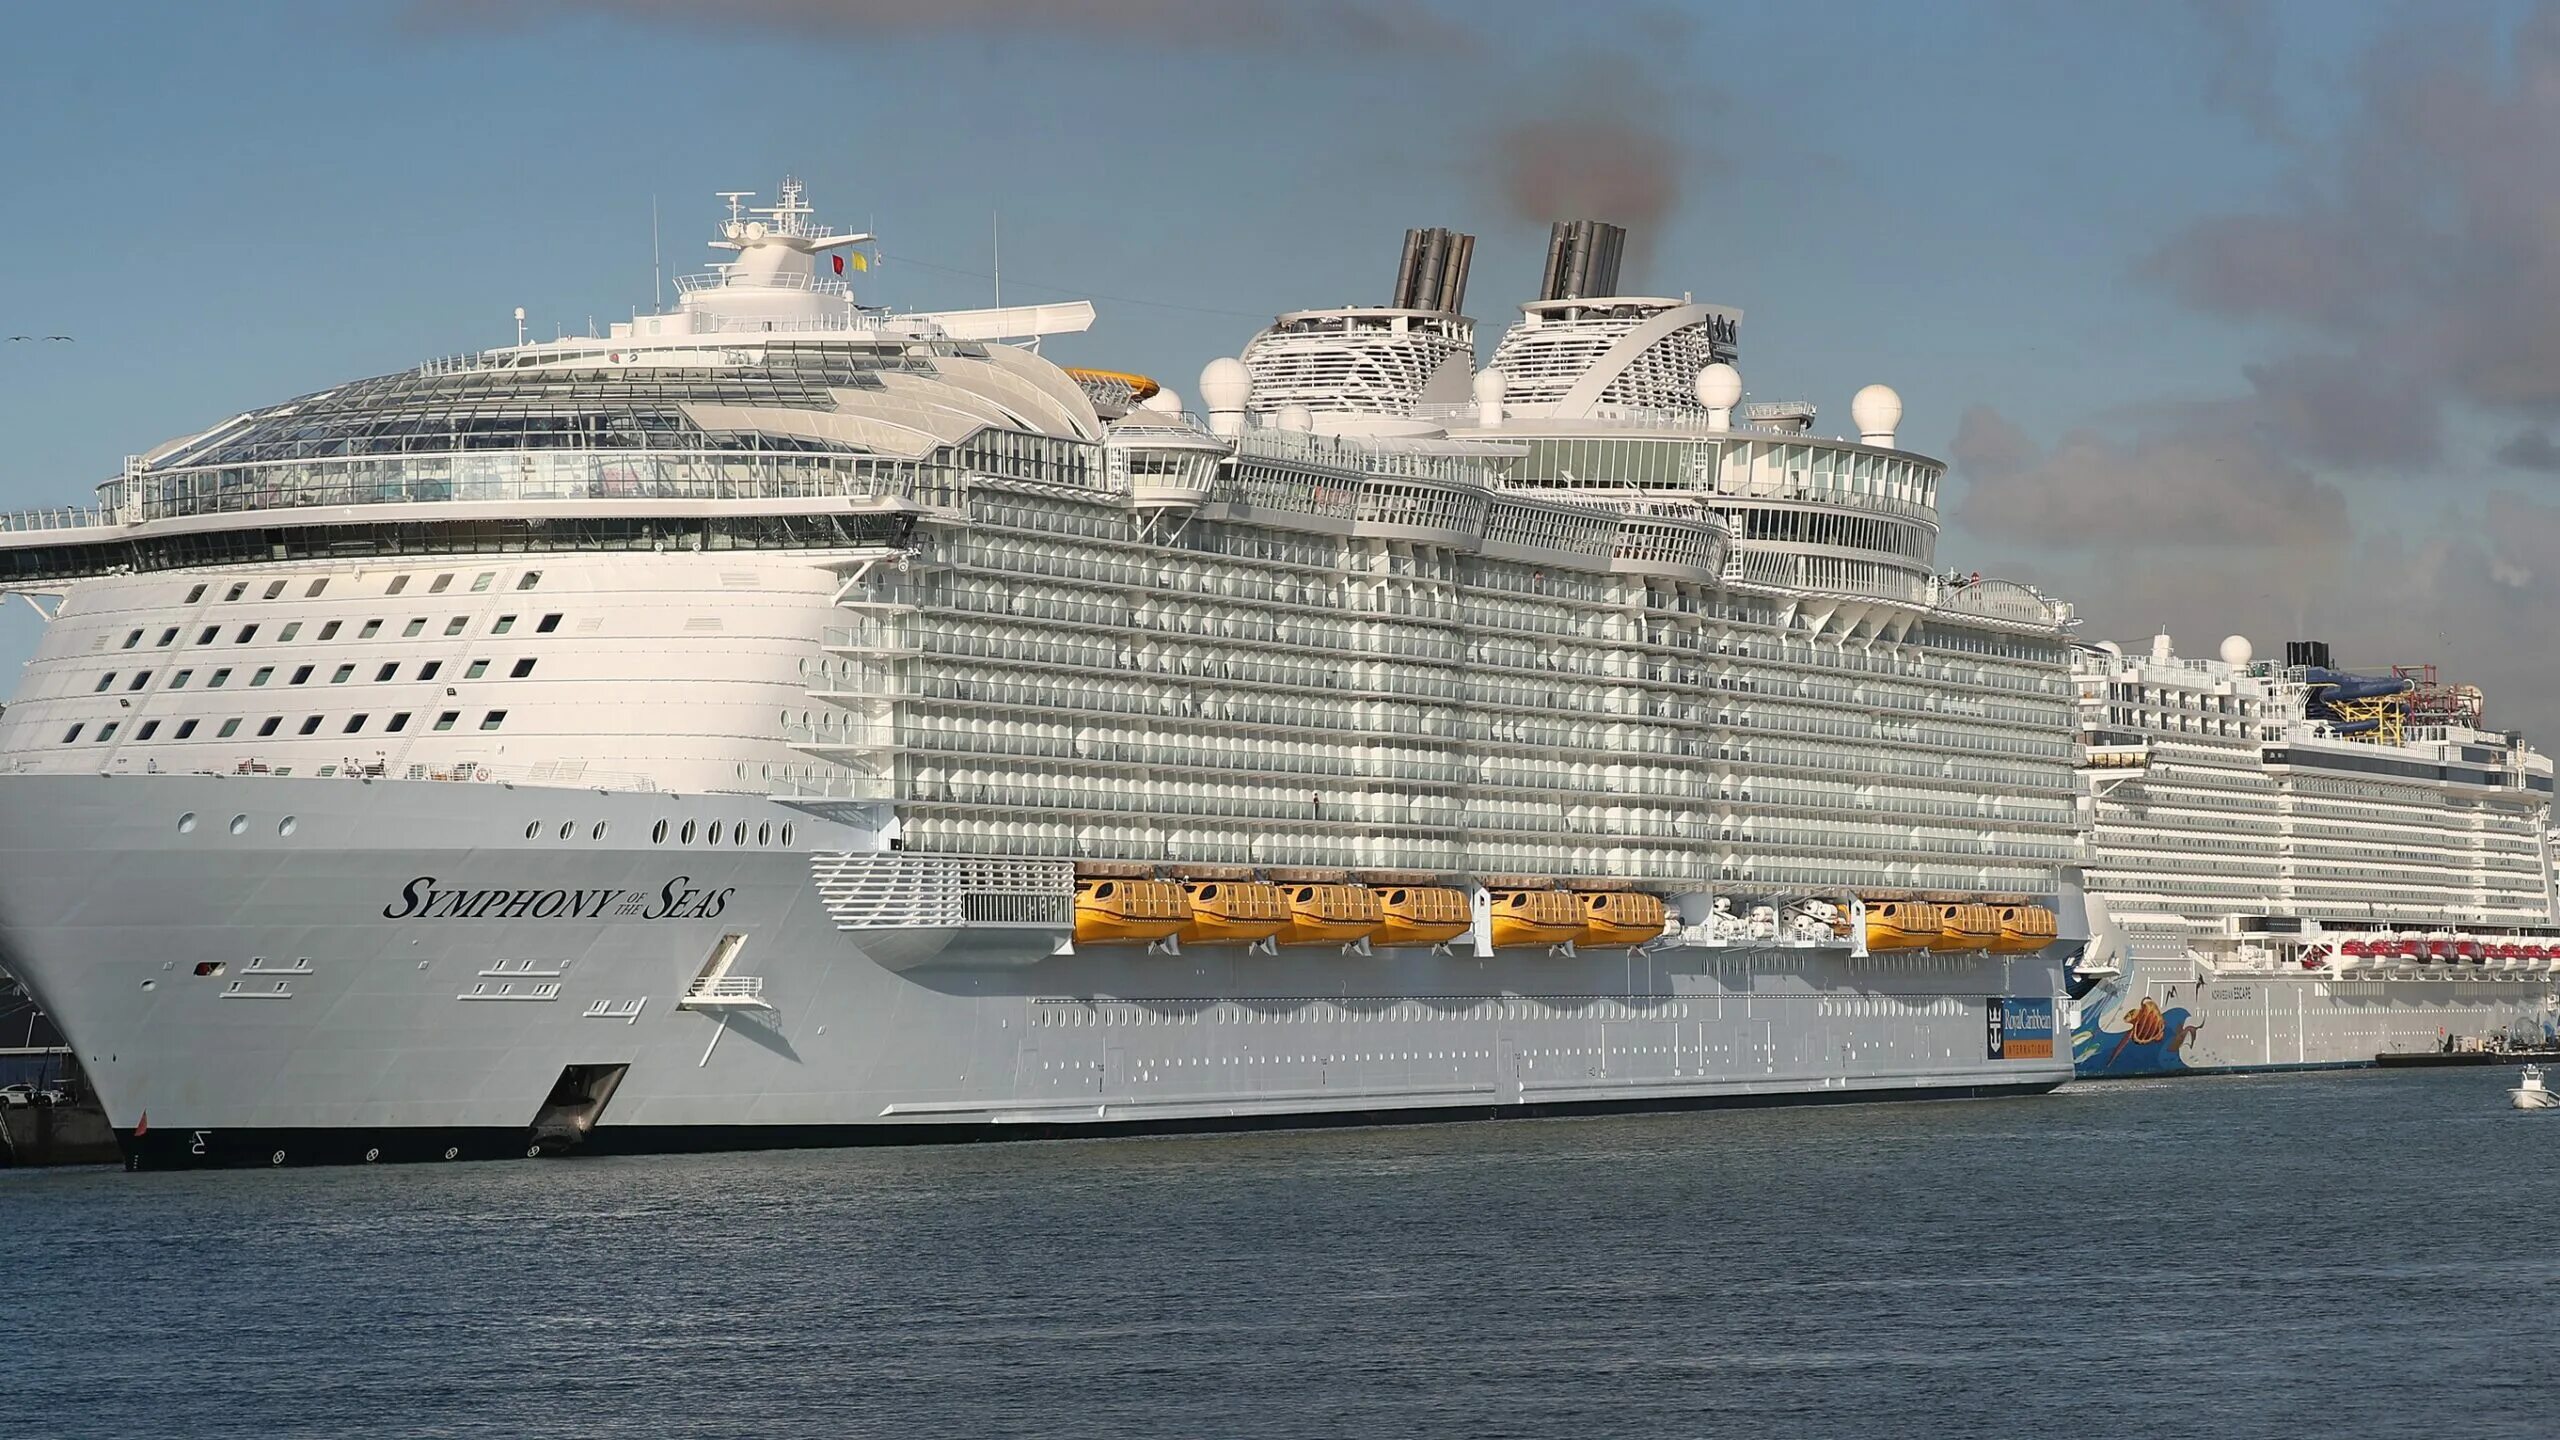 Royal Caribbean-dan “Symphony of the Seas”. Symphony of the Seas круизный лайнер. Самый большой круизный лайнер в Майами. Voyager of the Seas.